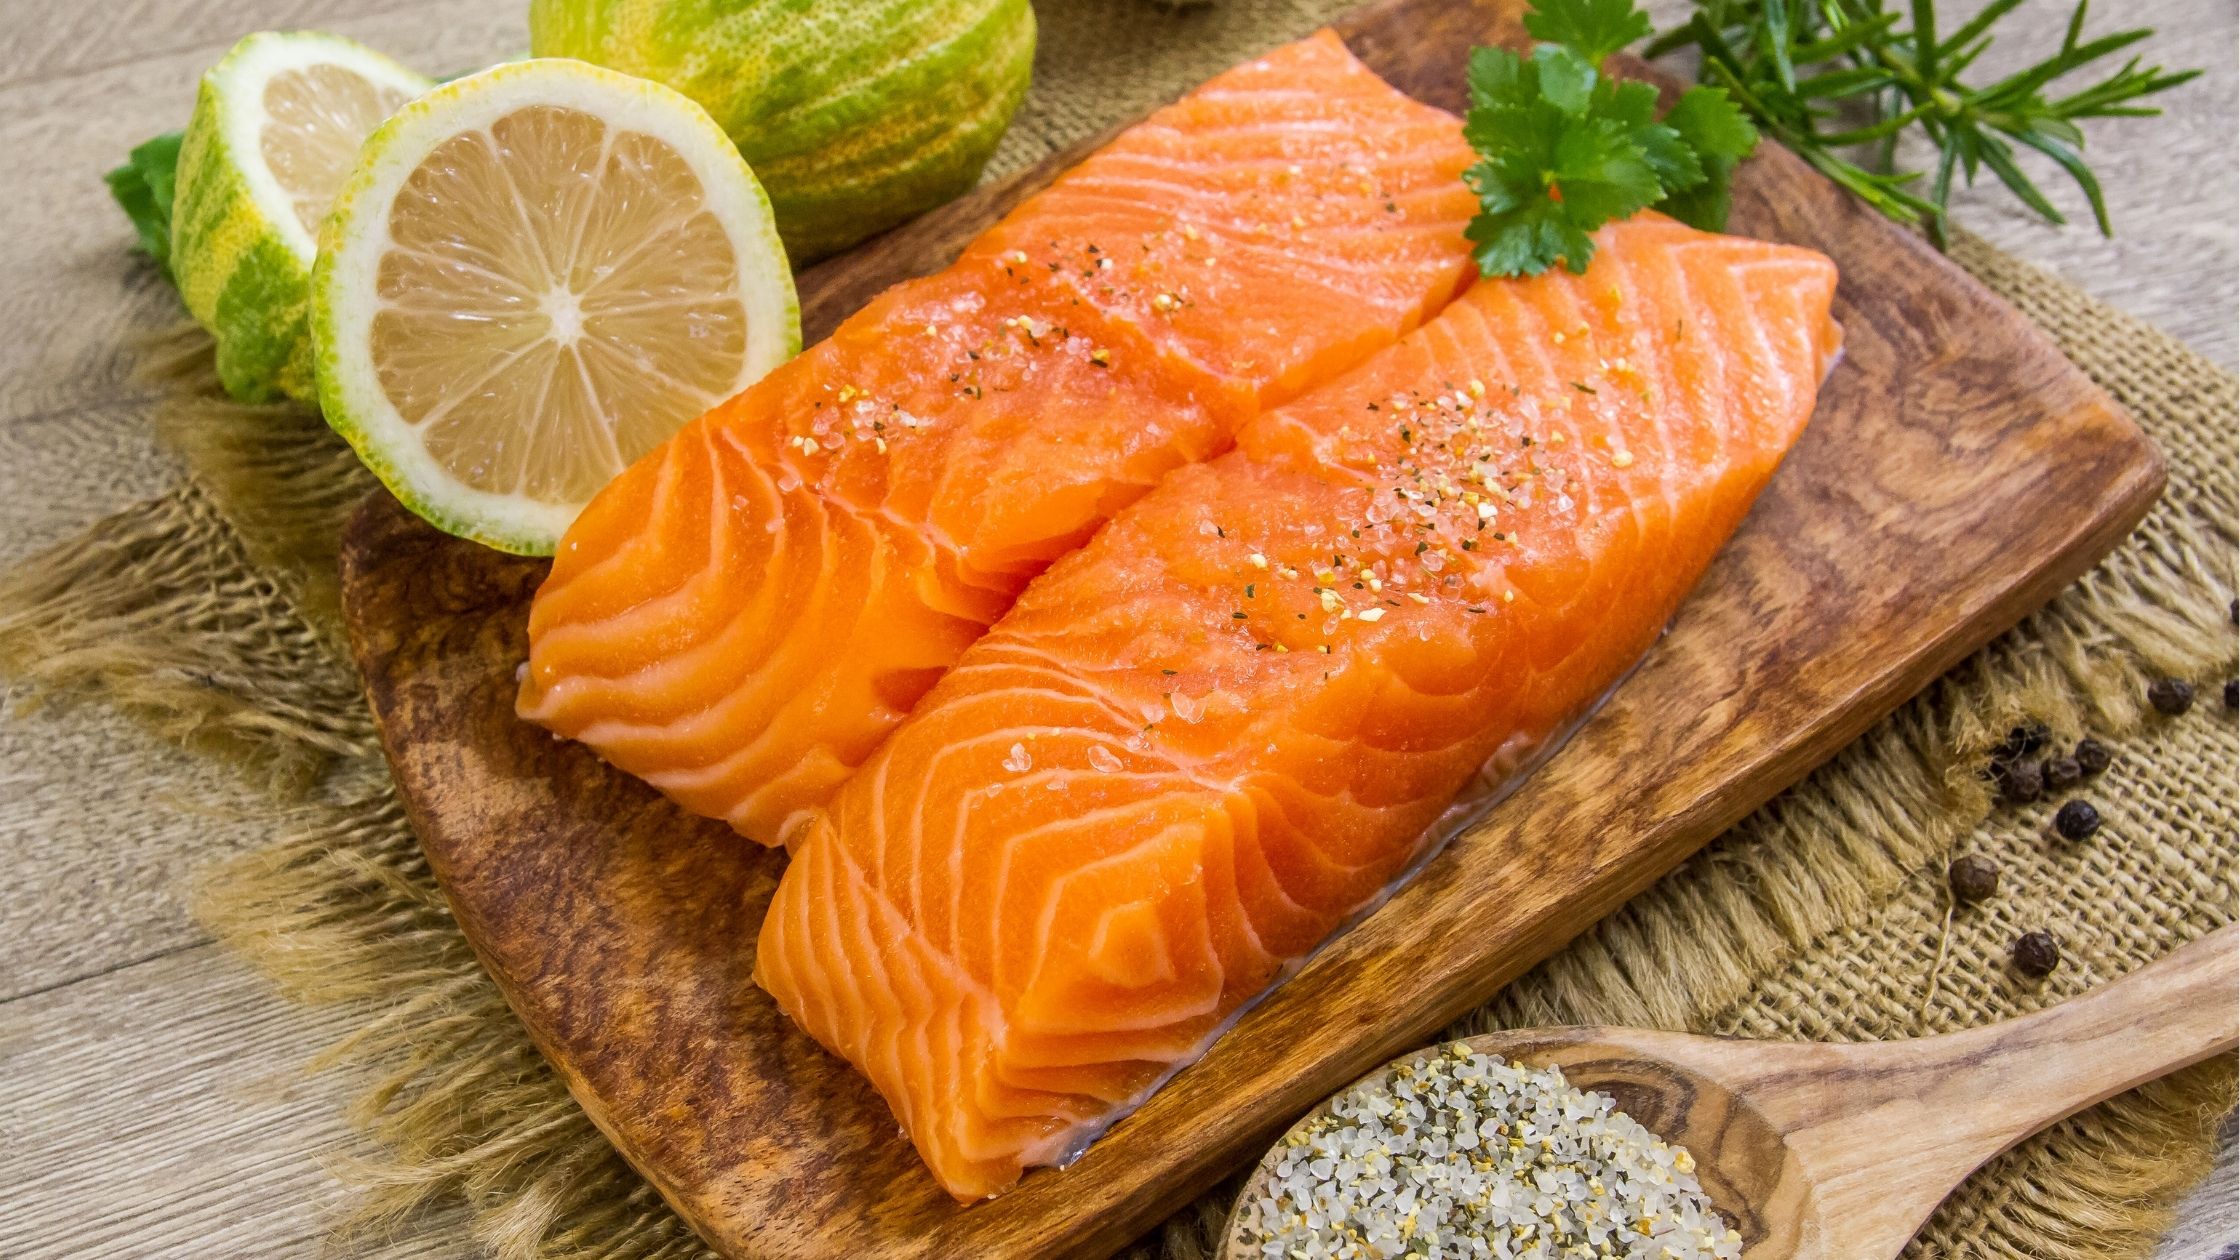  Benefits of Salmon